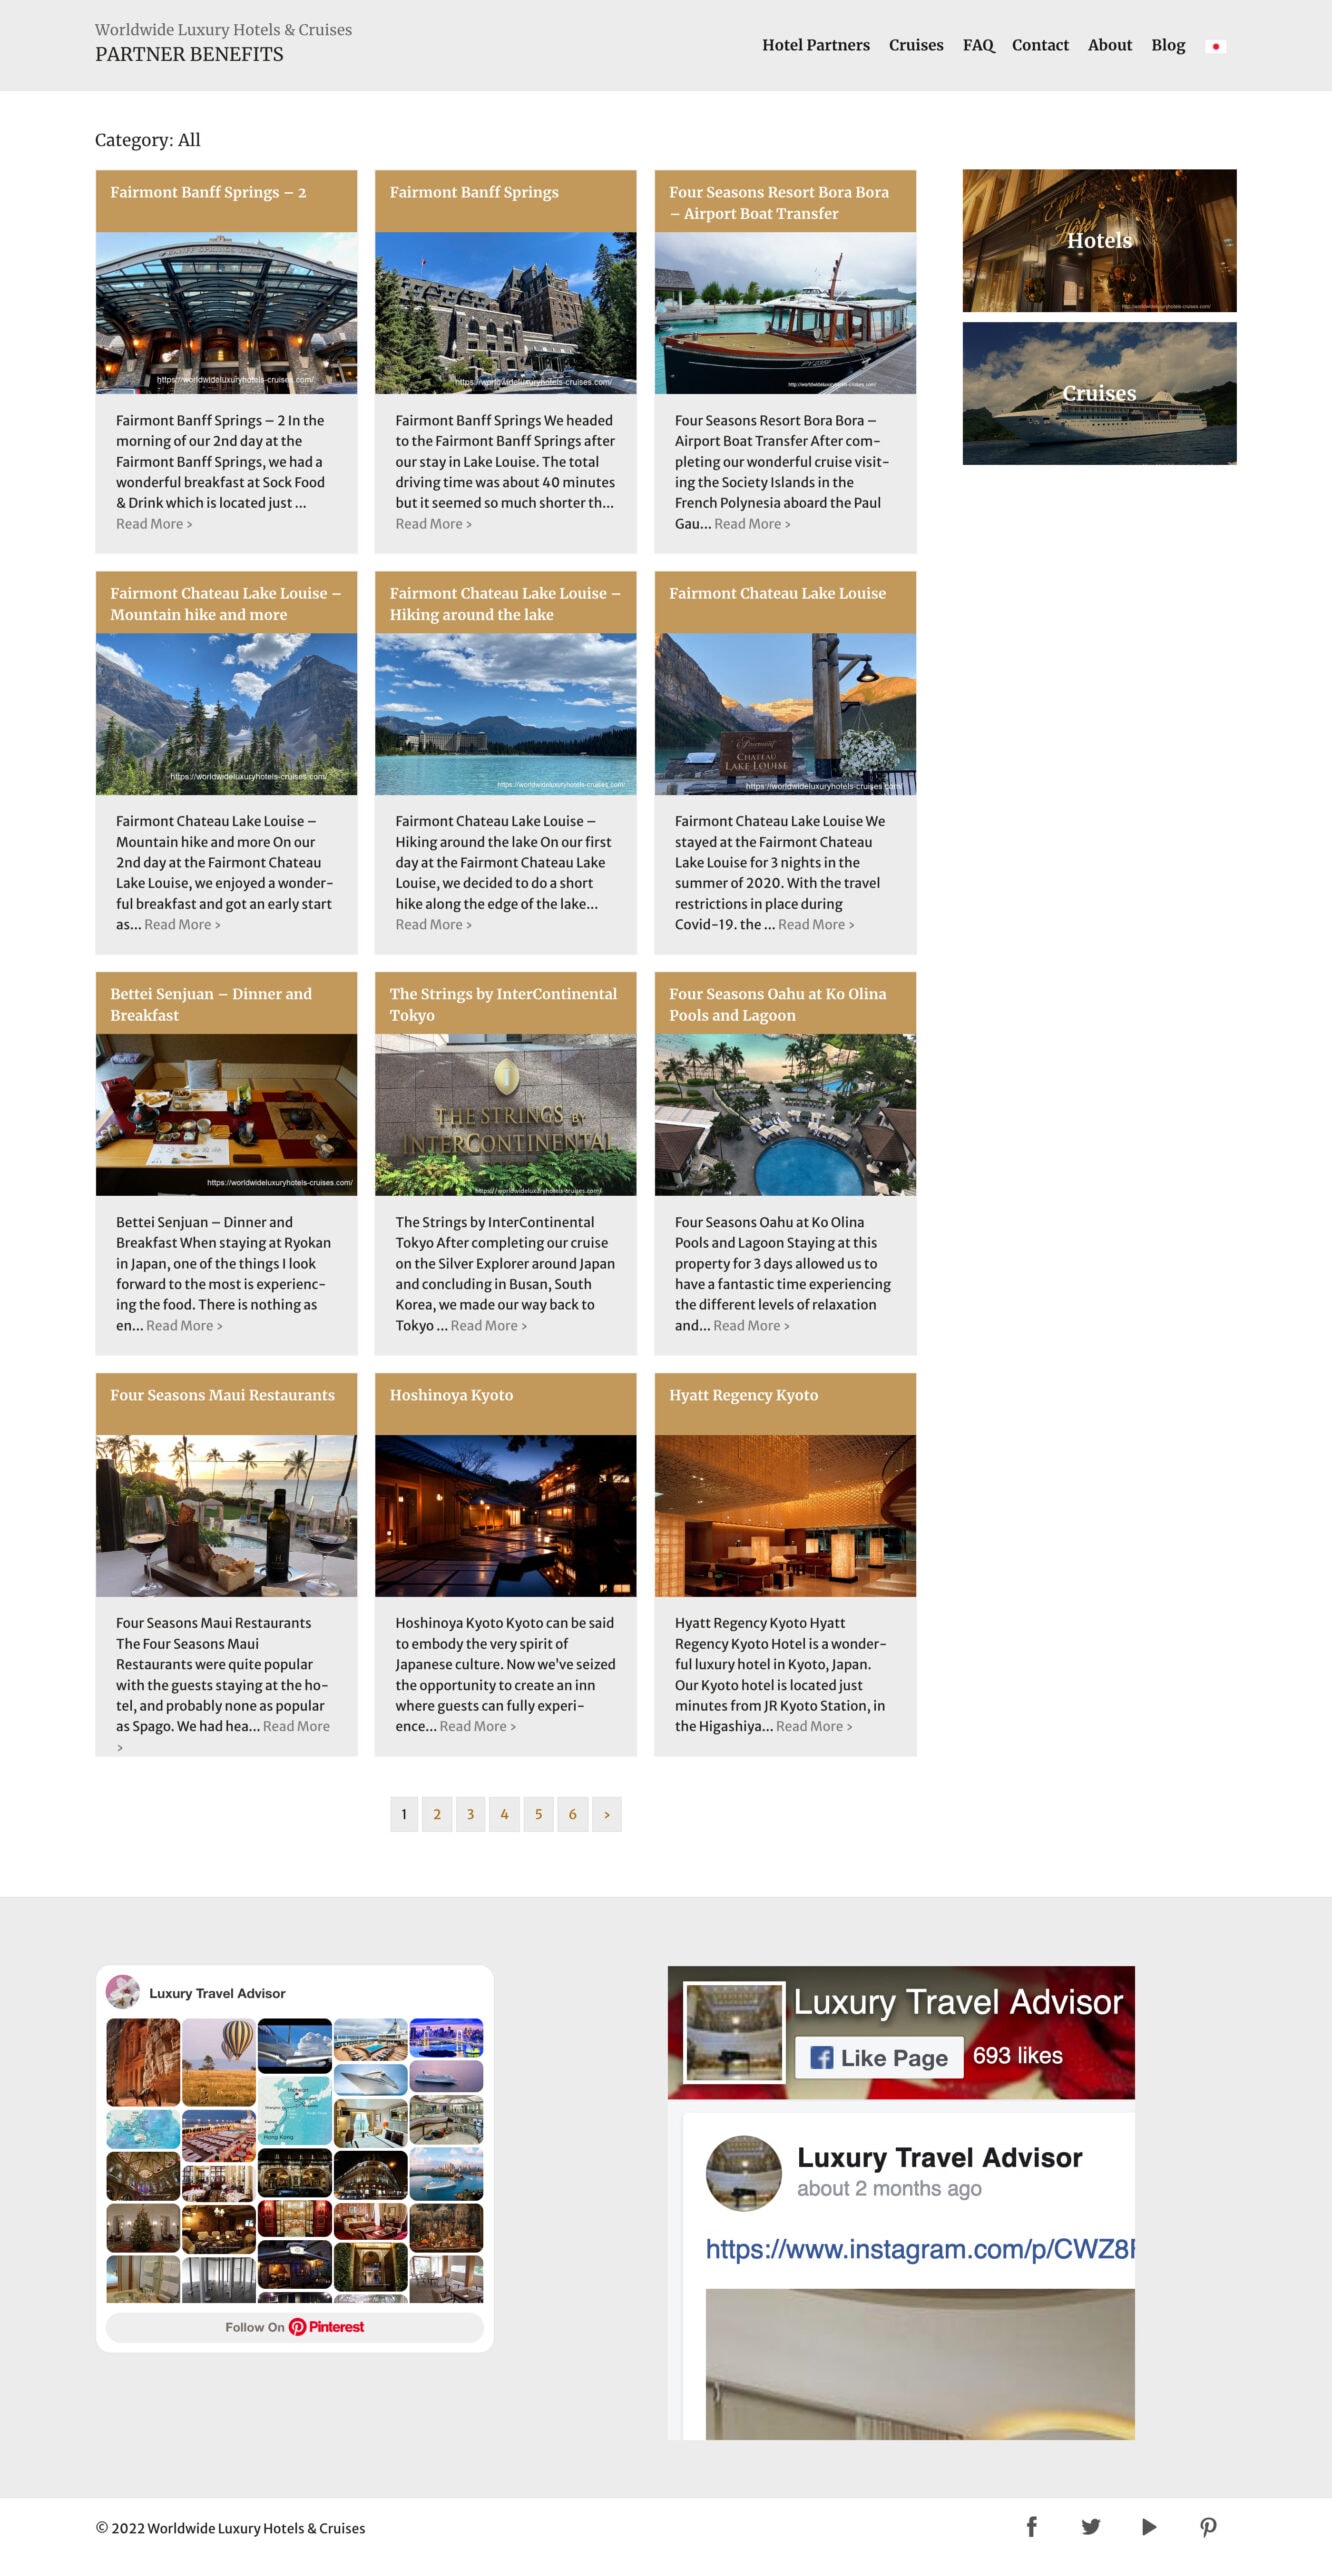 Worldwide Luxury Hotels & Cruises - website - blog archive